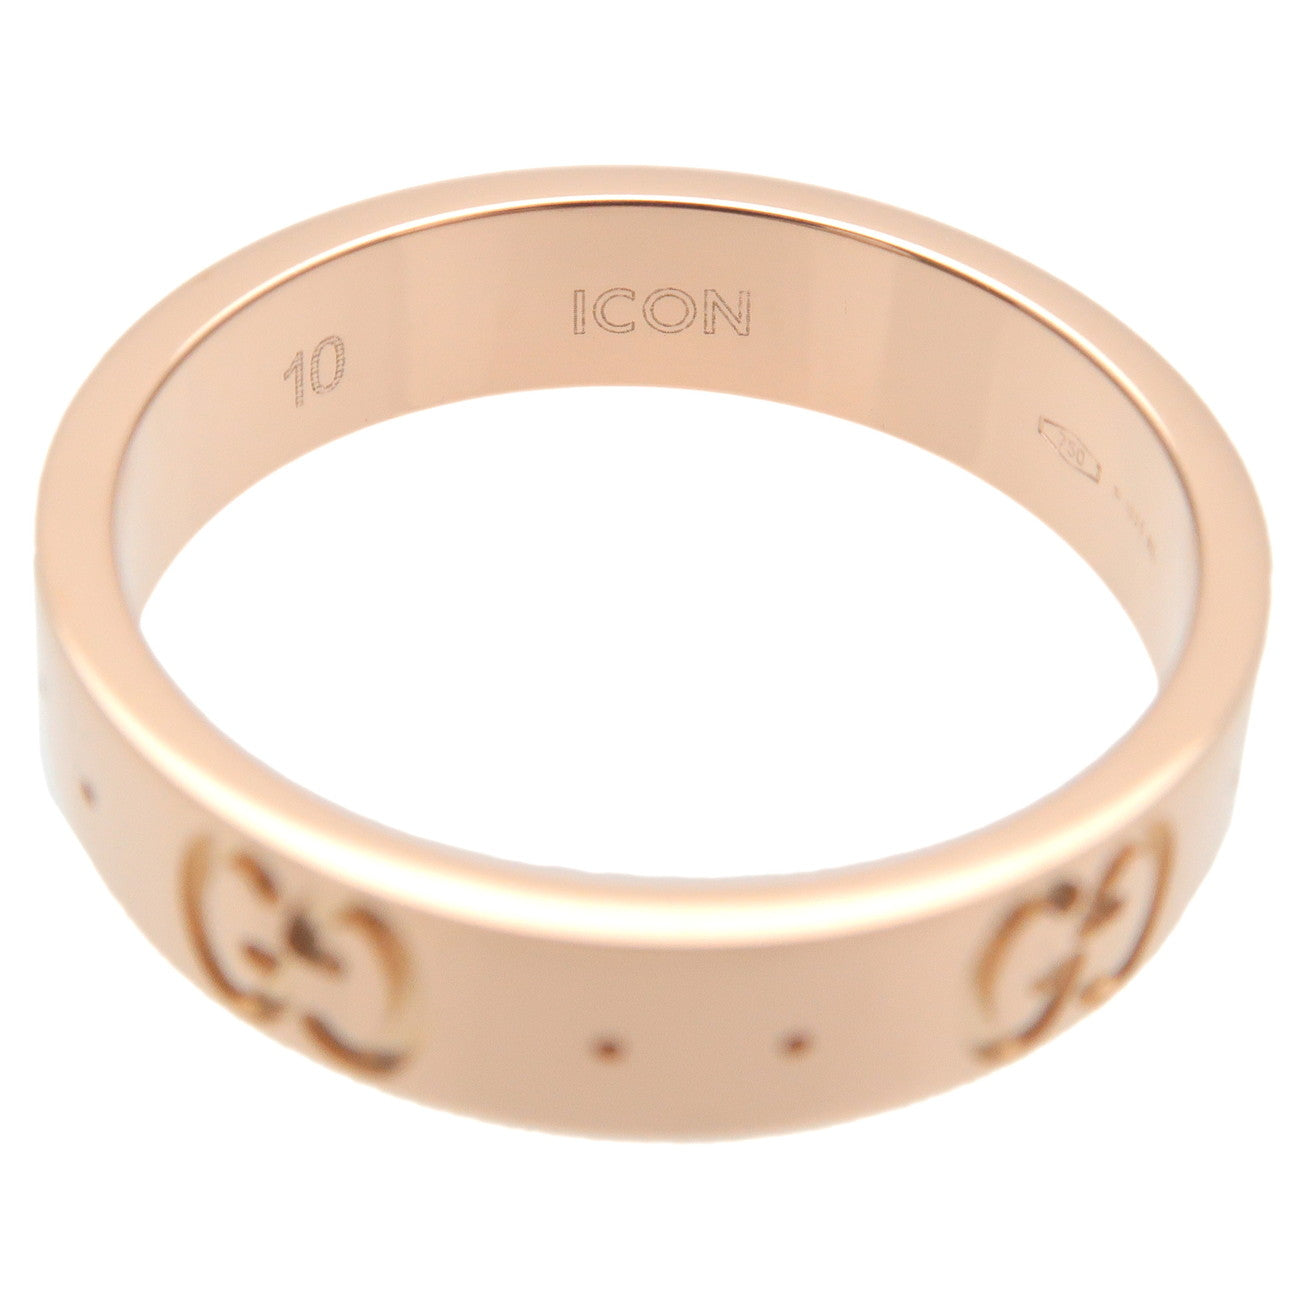 GUCCI Icon Ring K18PG 750PG Rose Gold #10 US5-5.5 EU50 HK11.5